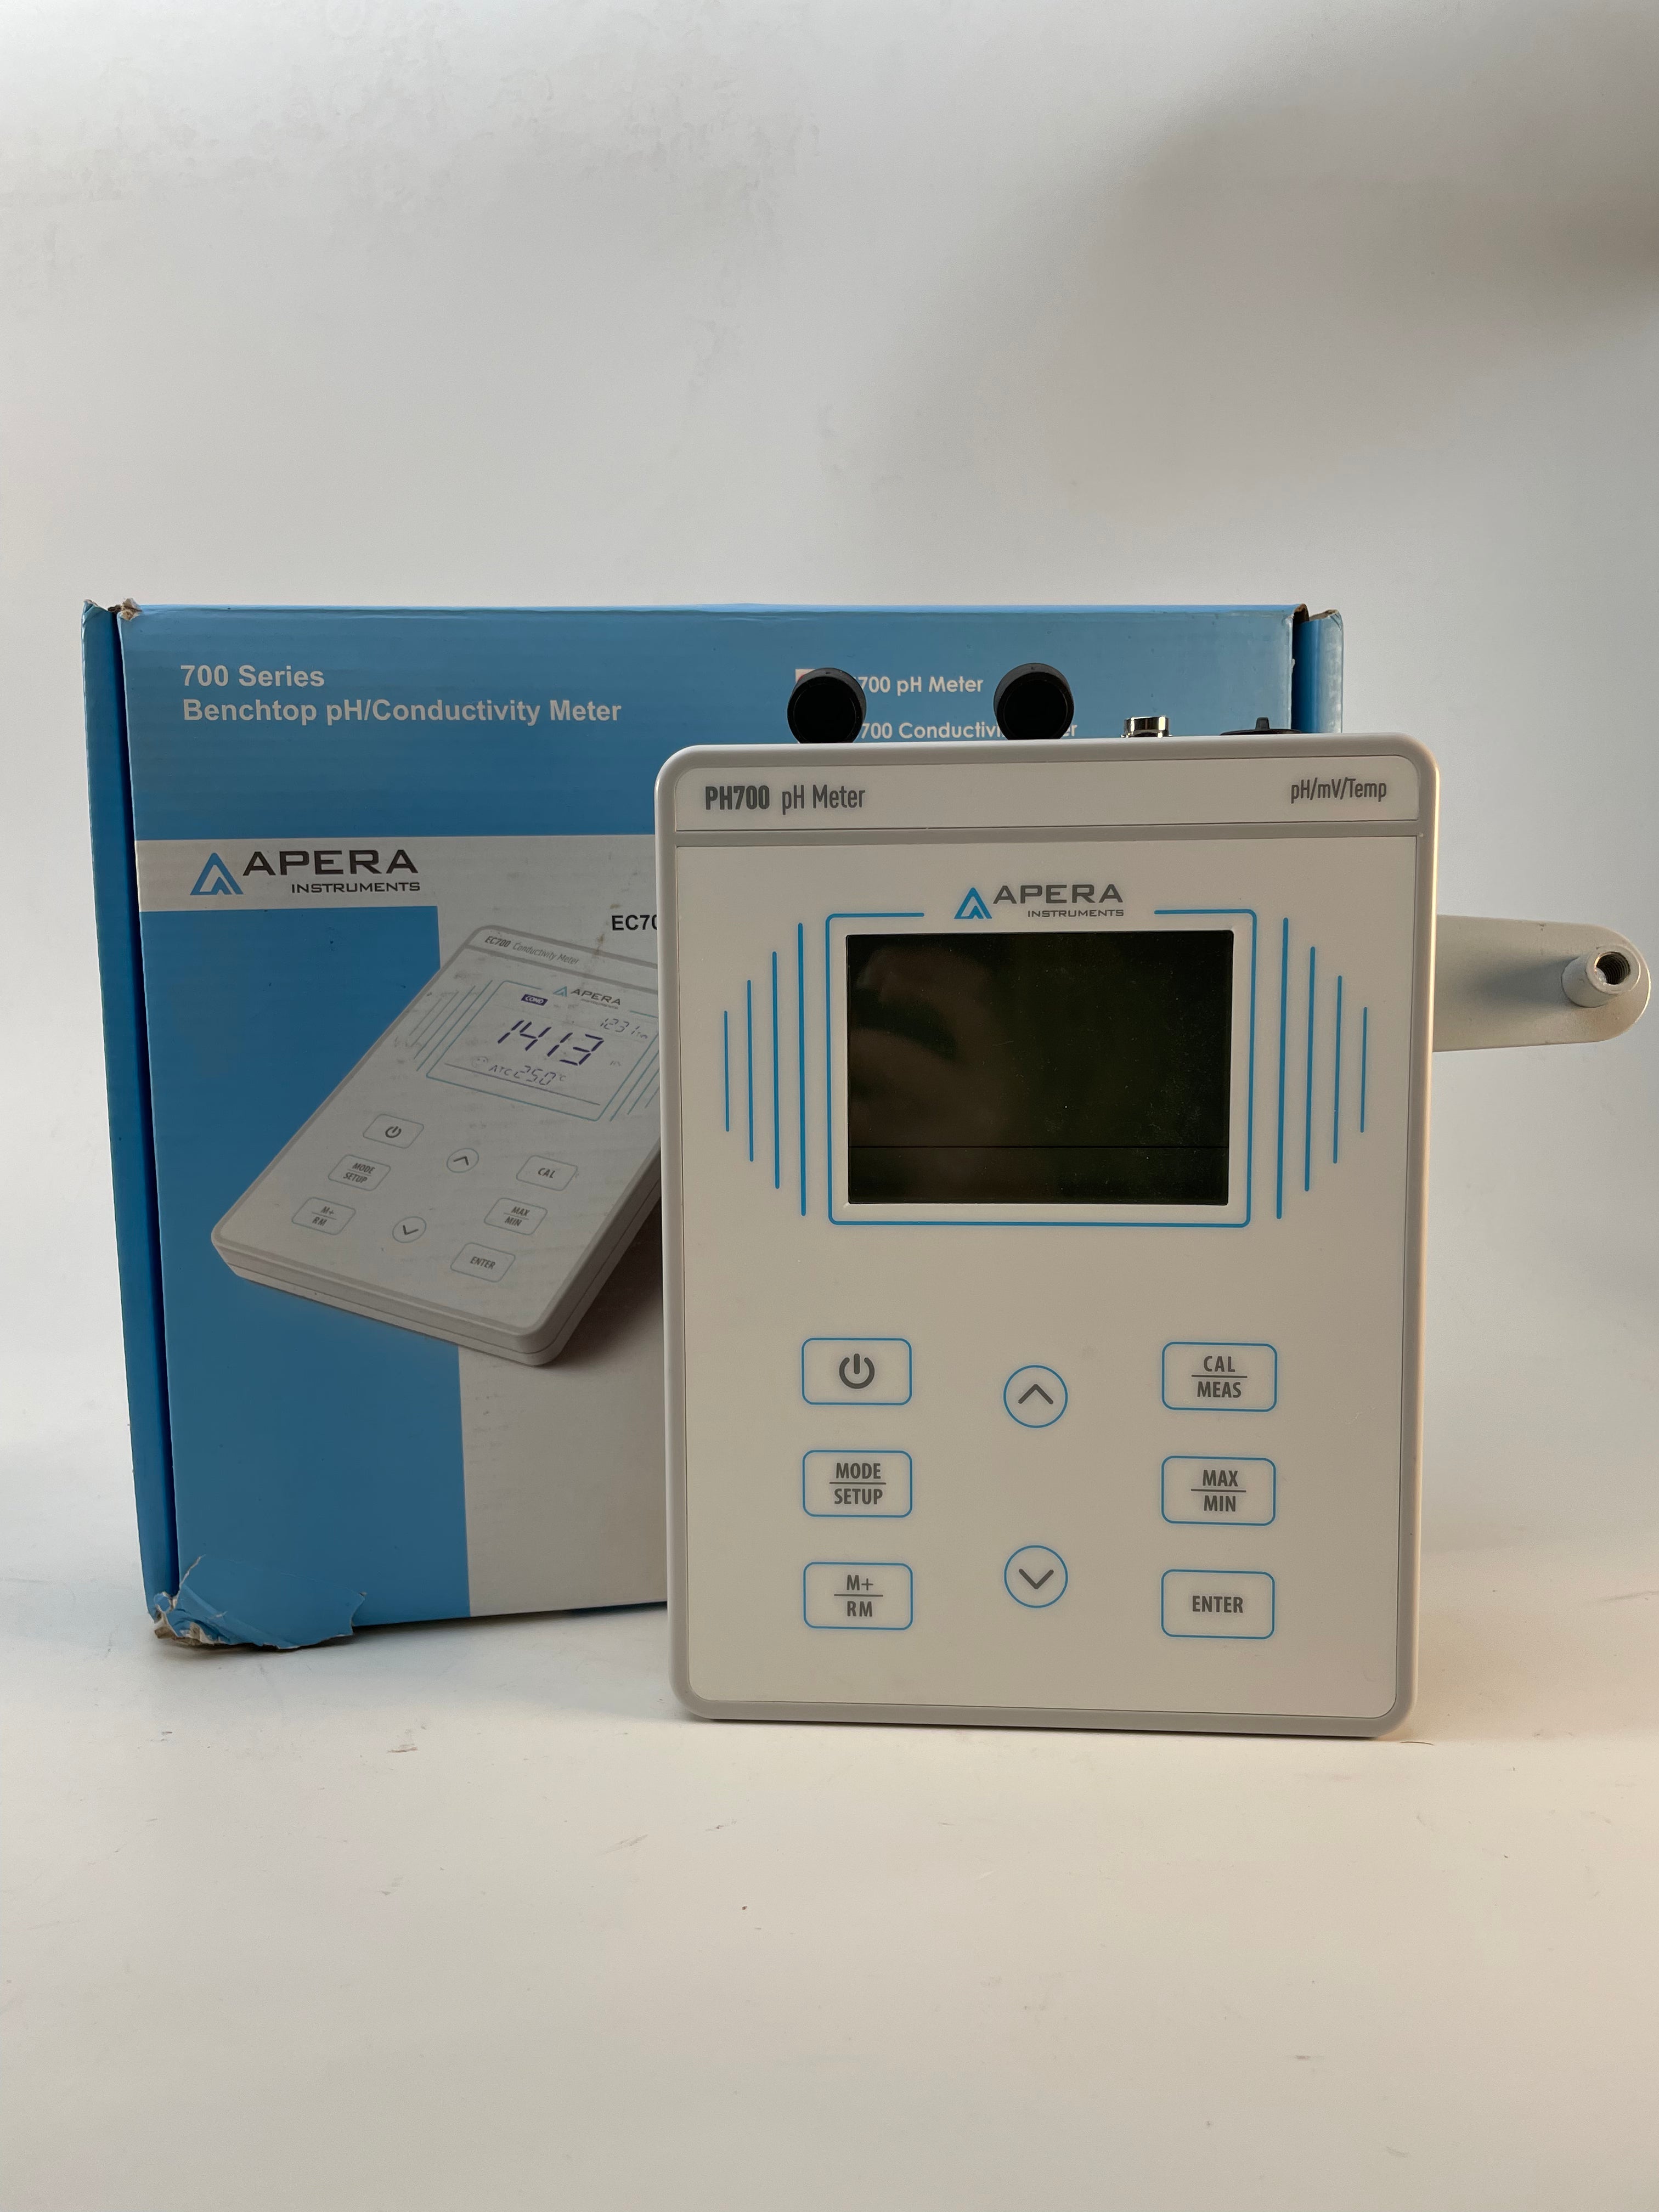 Apera Instruments PH700 Benchtop pH Meter